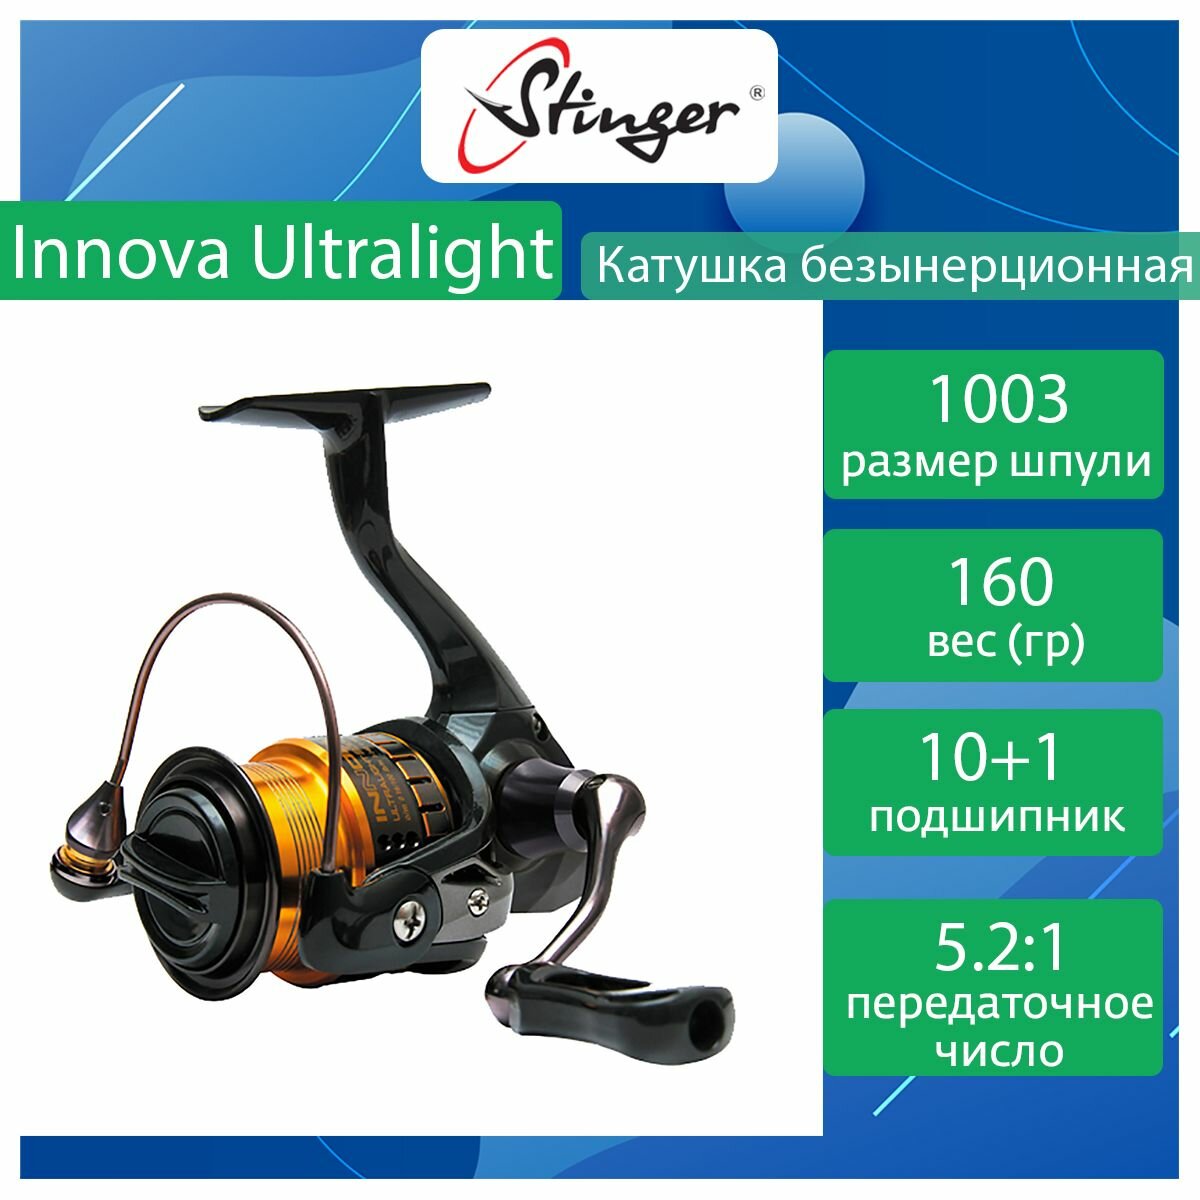 Катушка для рыбалки безынерционная Stinger Innova Ultralight 1003